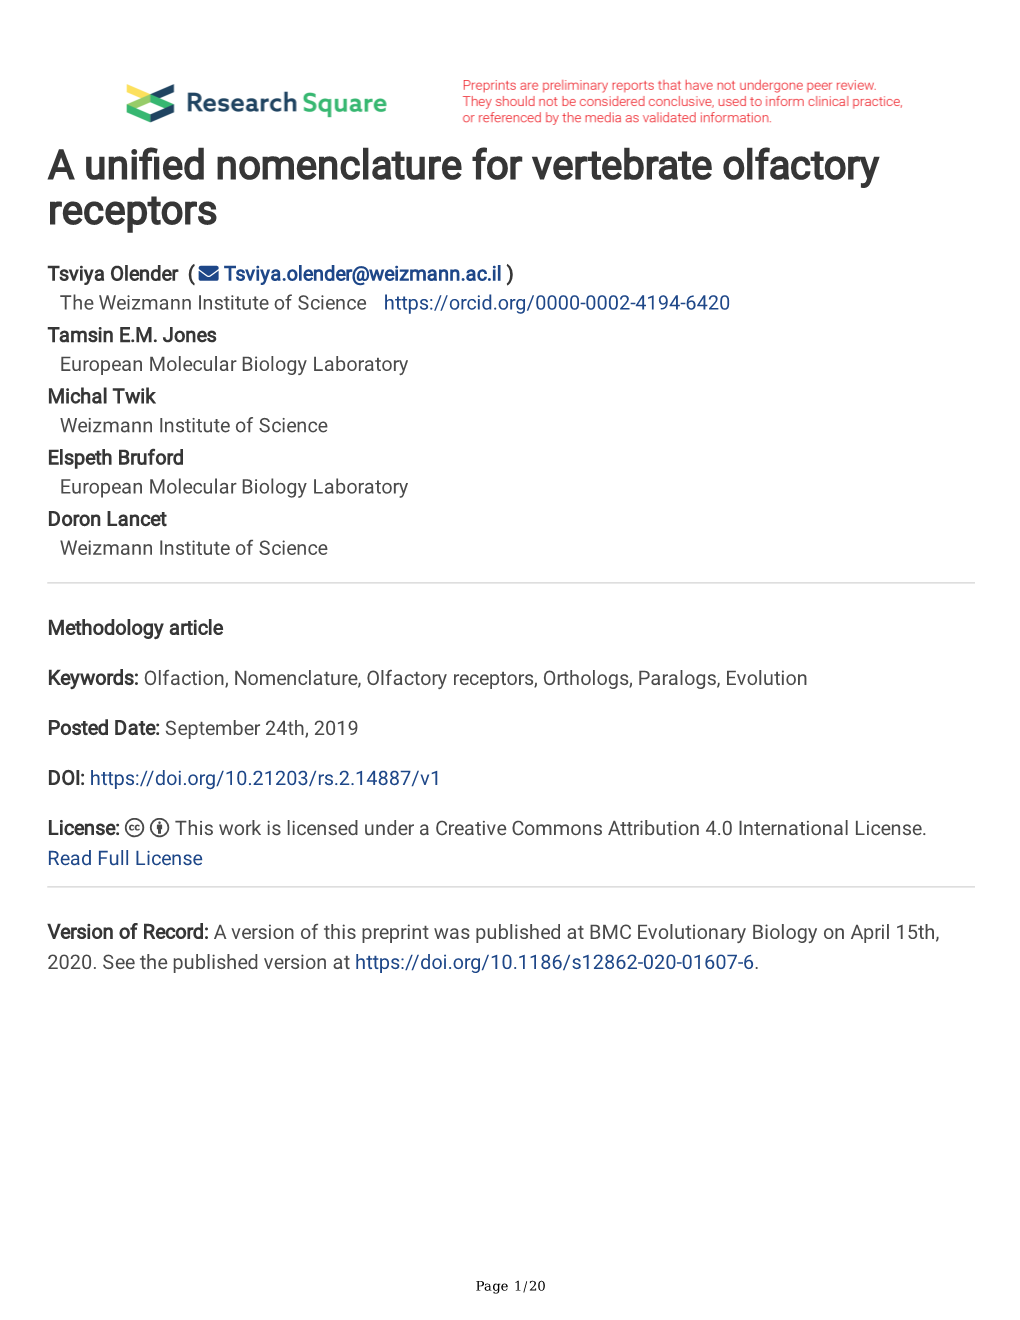 A Unified Nomenclature for Vertebrate Olfactory Receptors